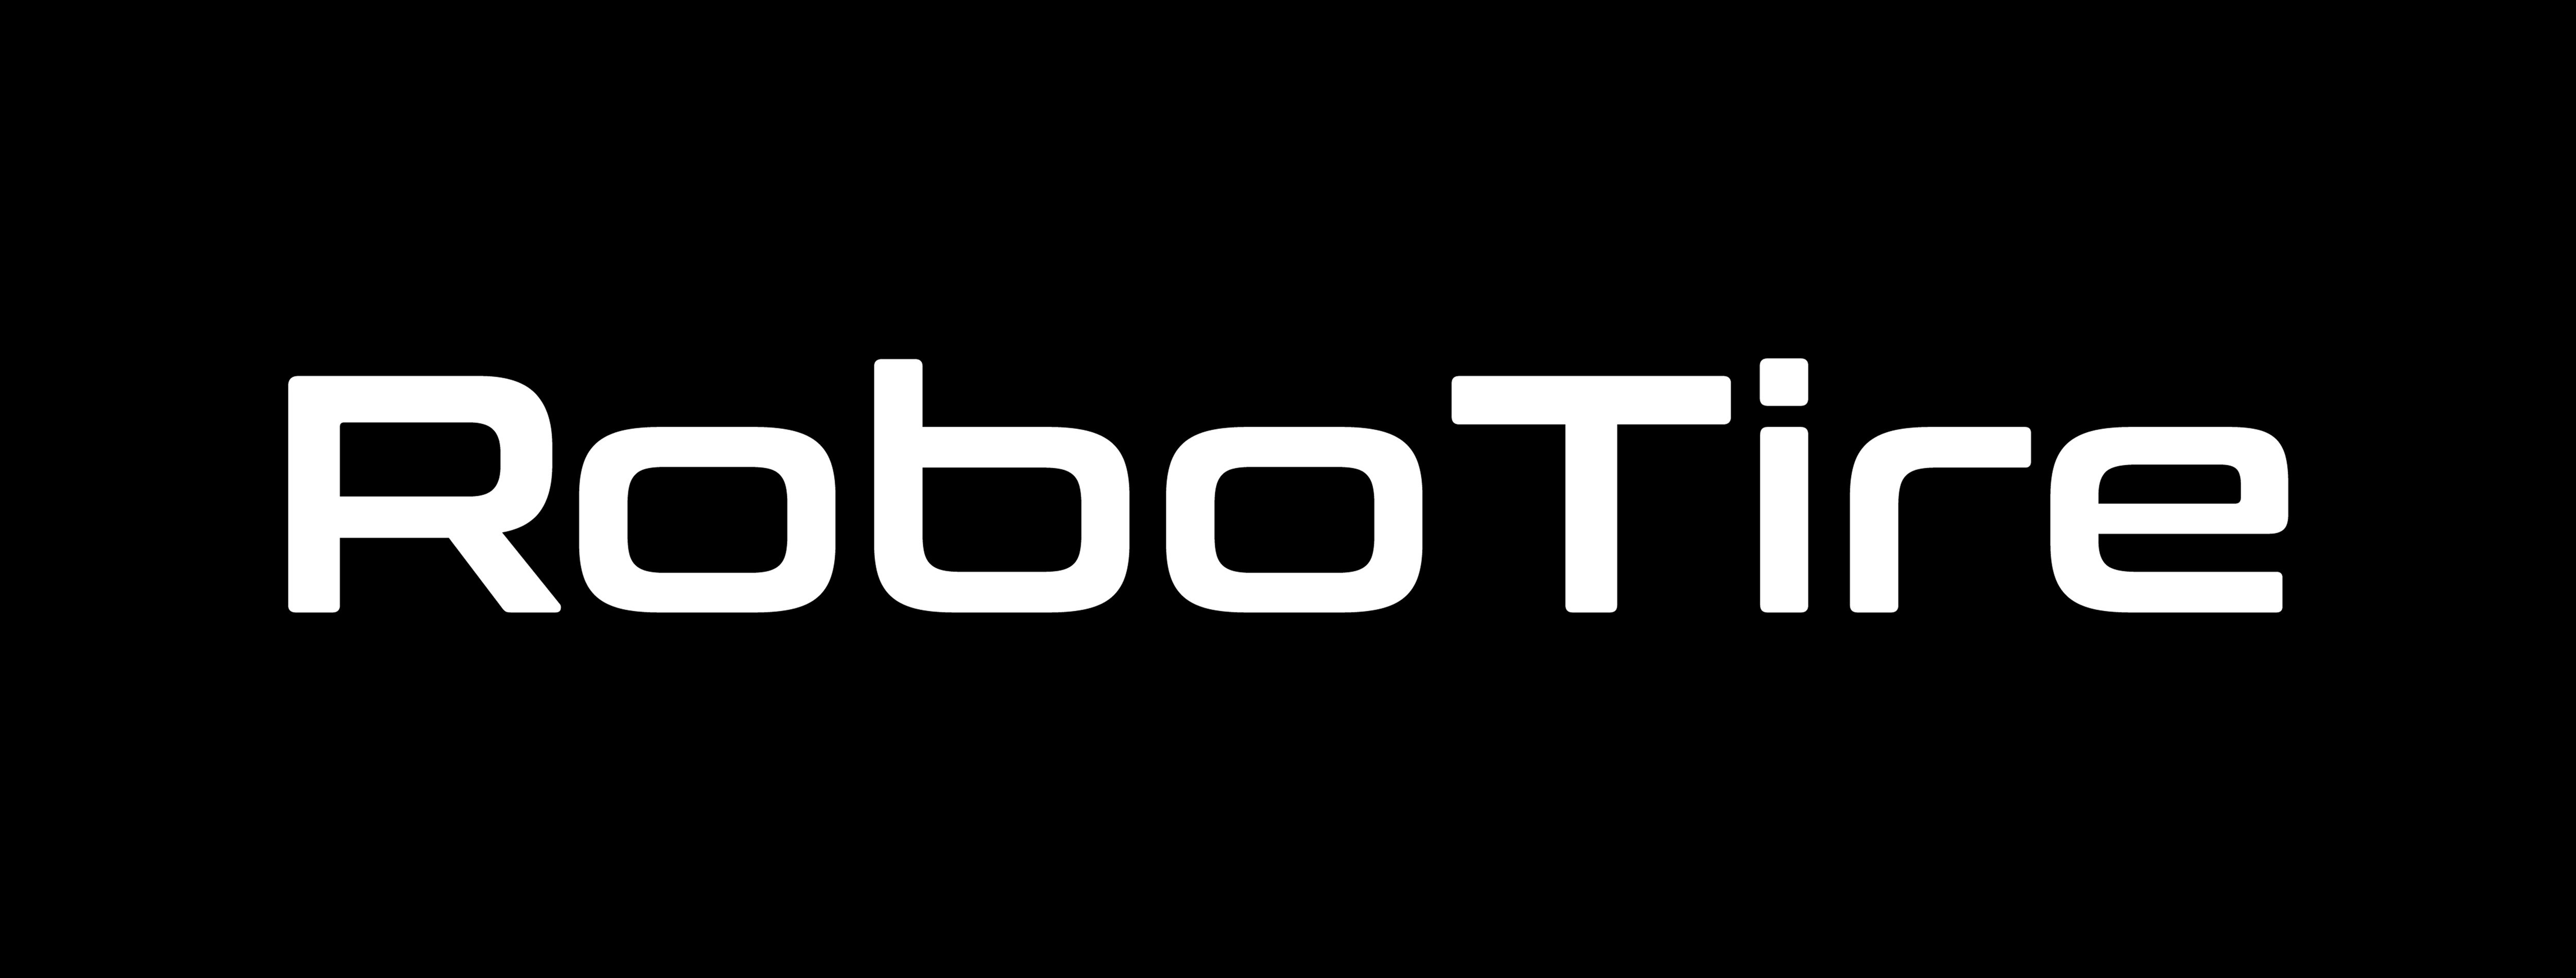 detroit-startup-funding-robotire